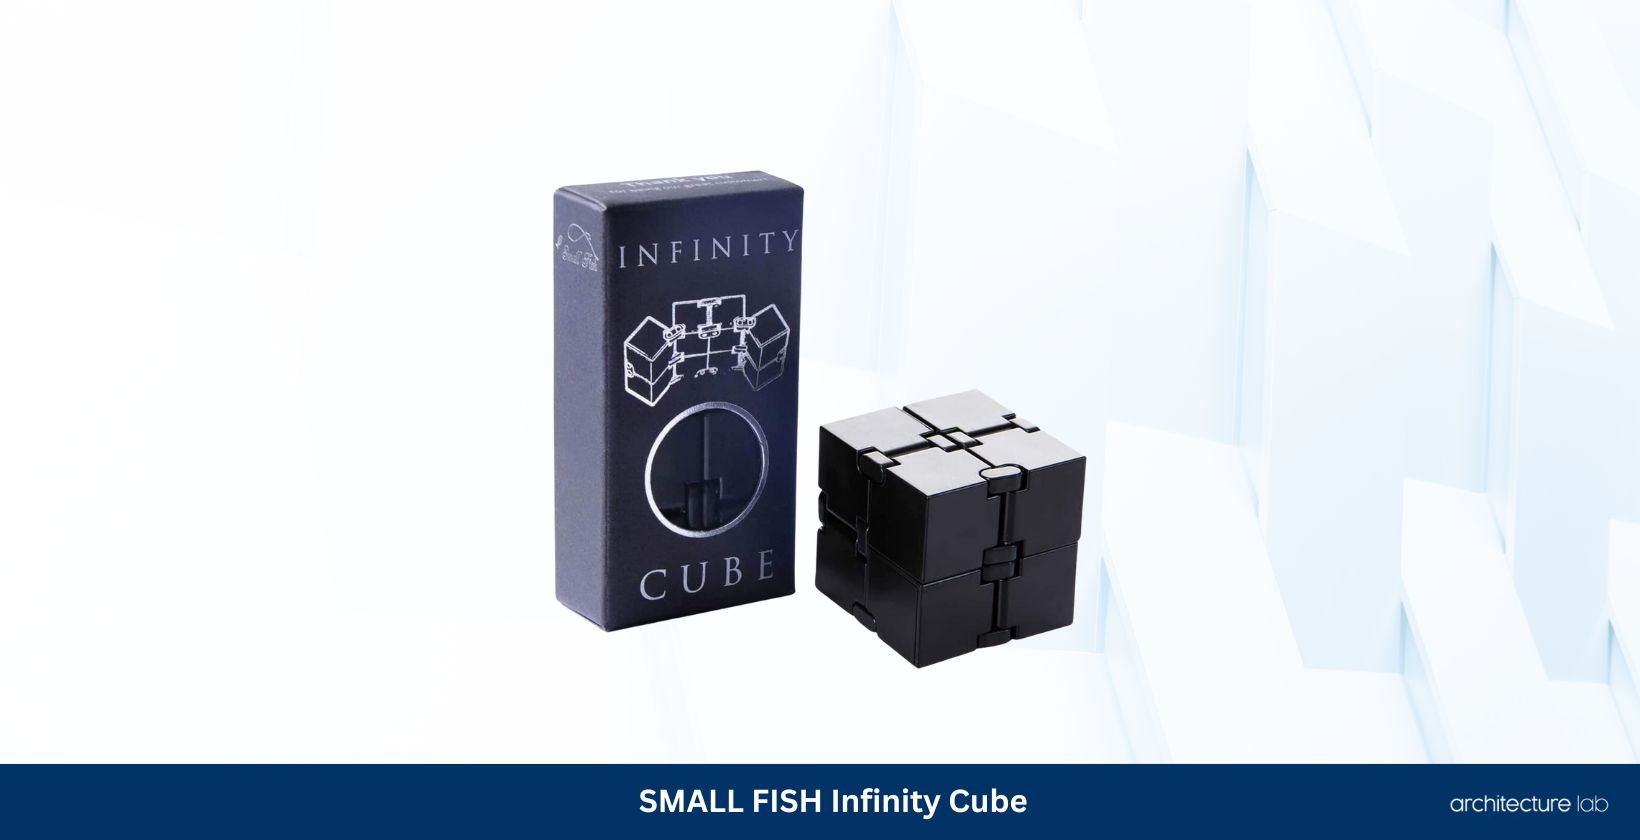 Small fish infinity cube